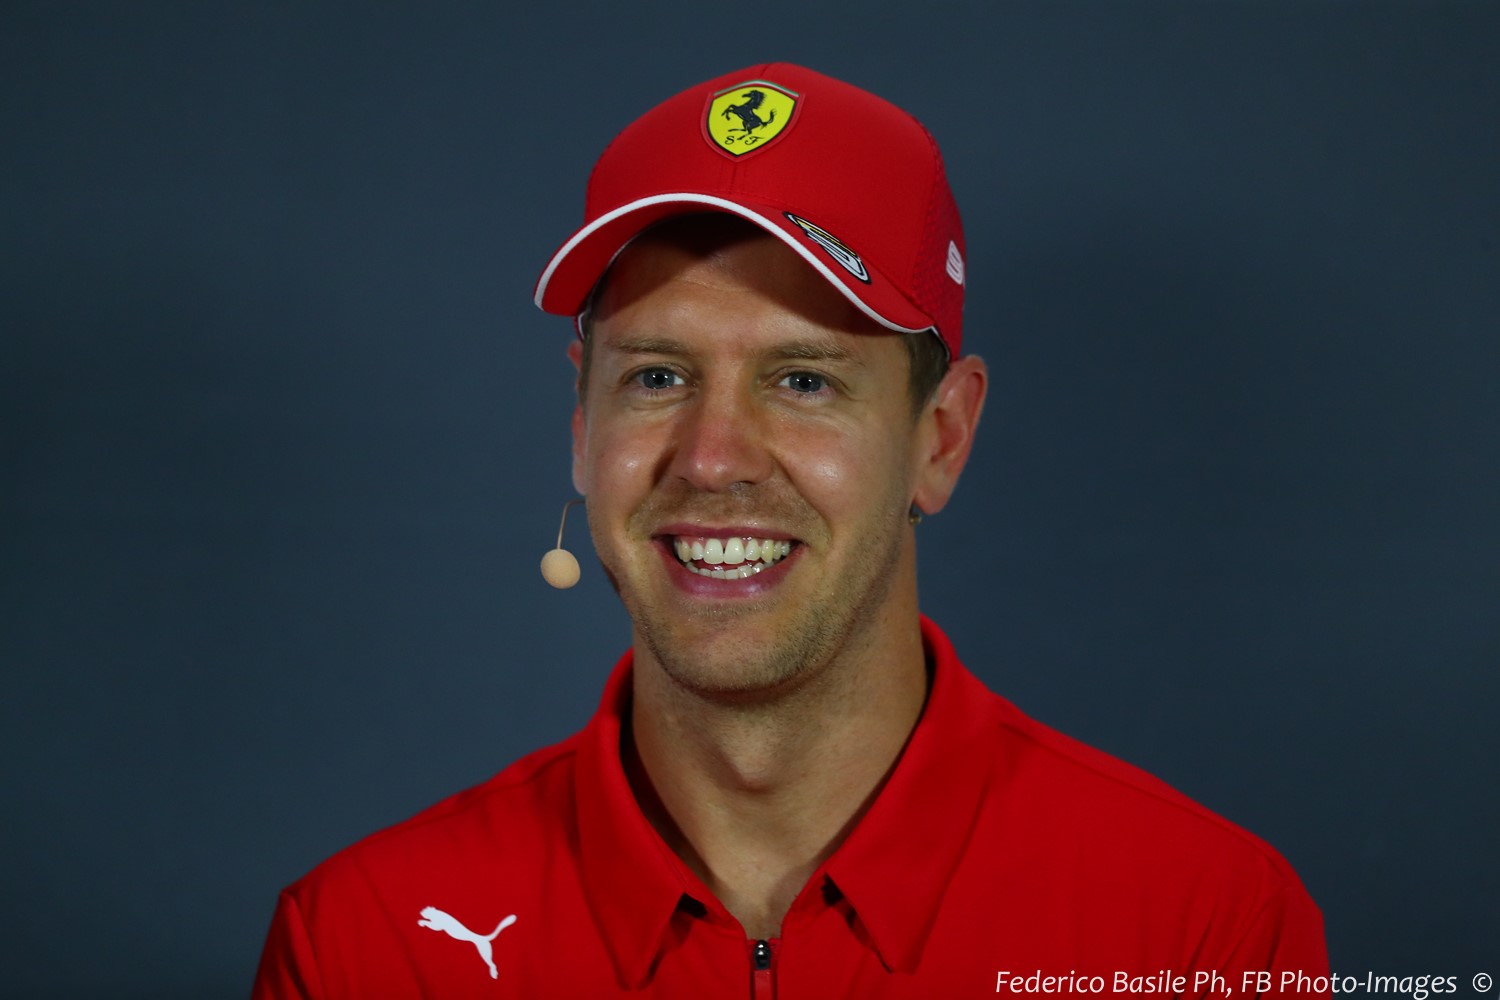 Berger says Vettel is too nice